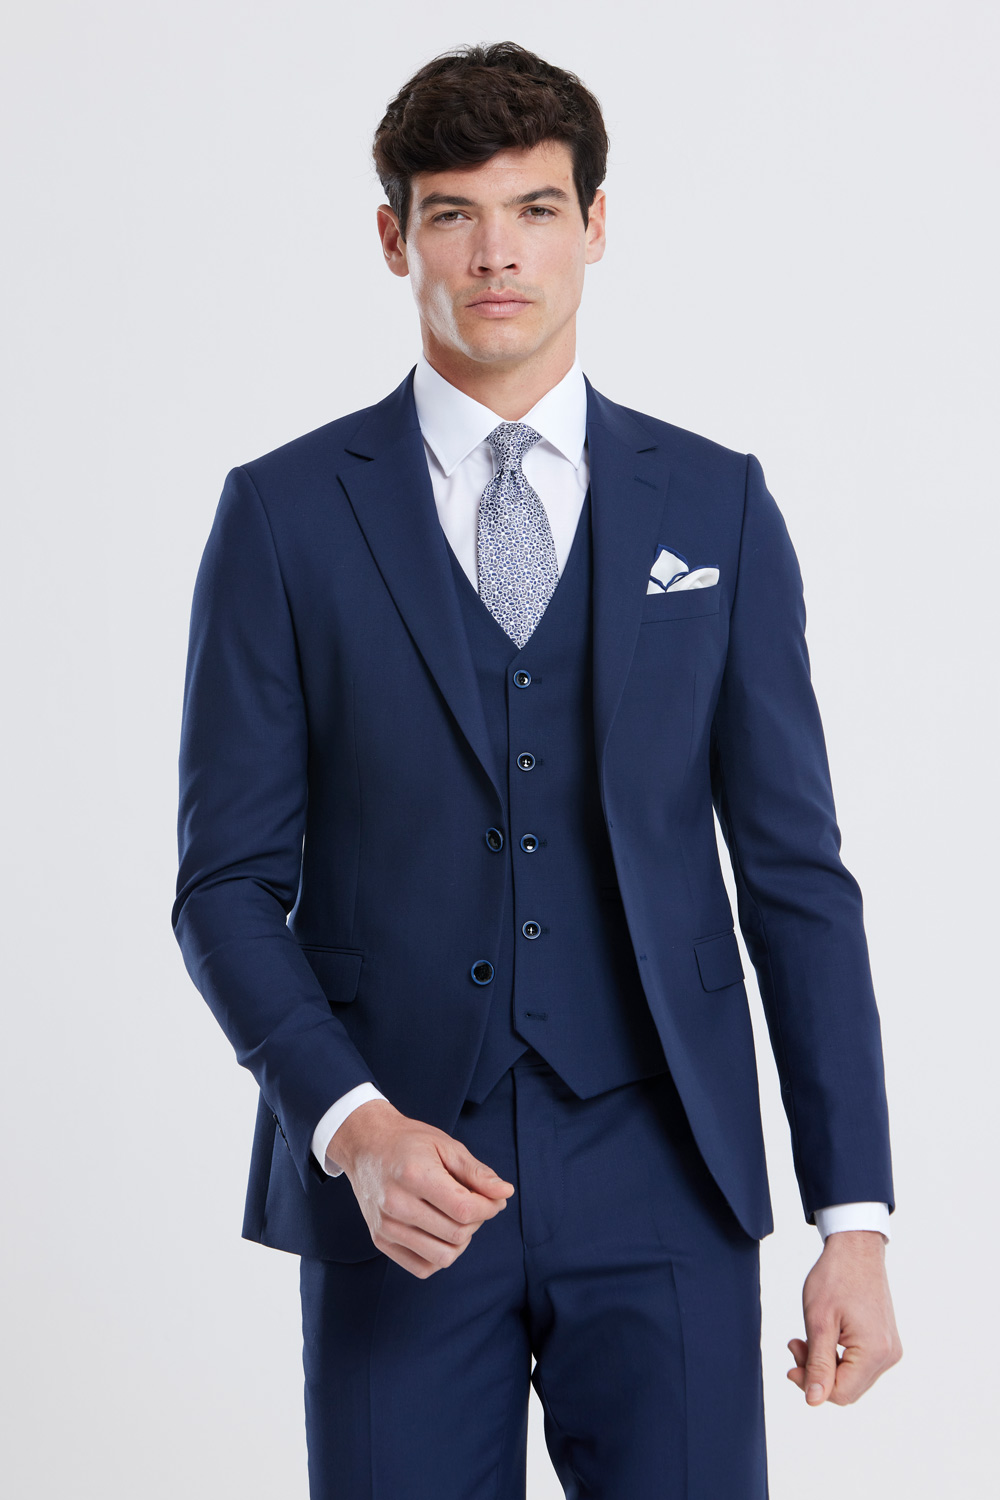 James Navy 3 Piece Wedding Suit - Tom Murphy's Formal and Menswear